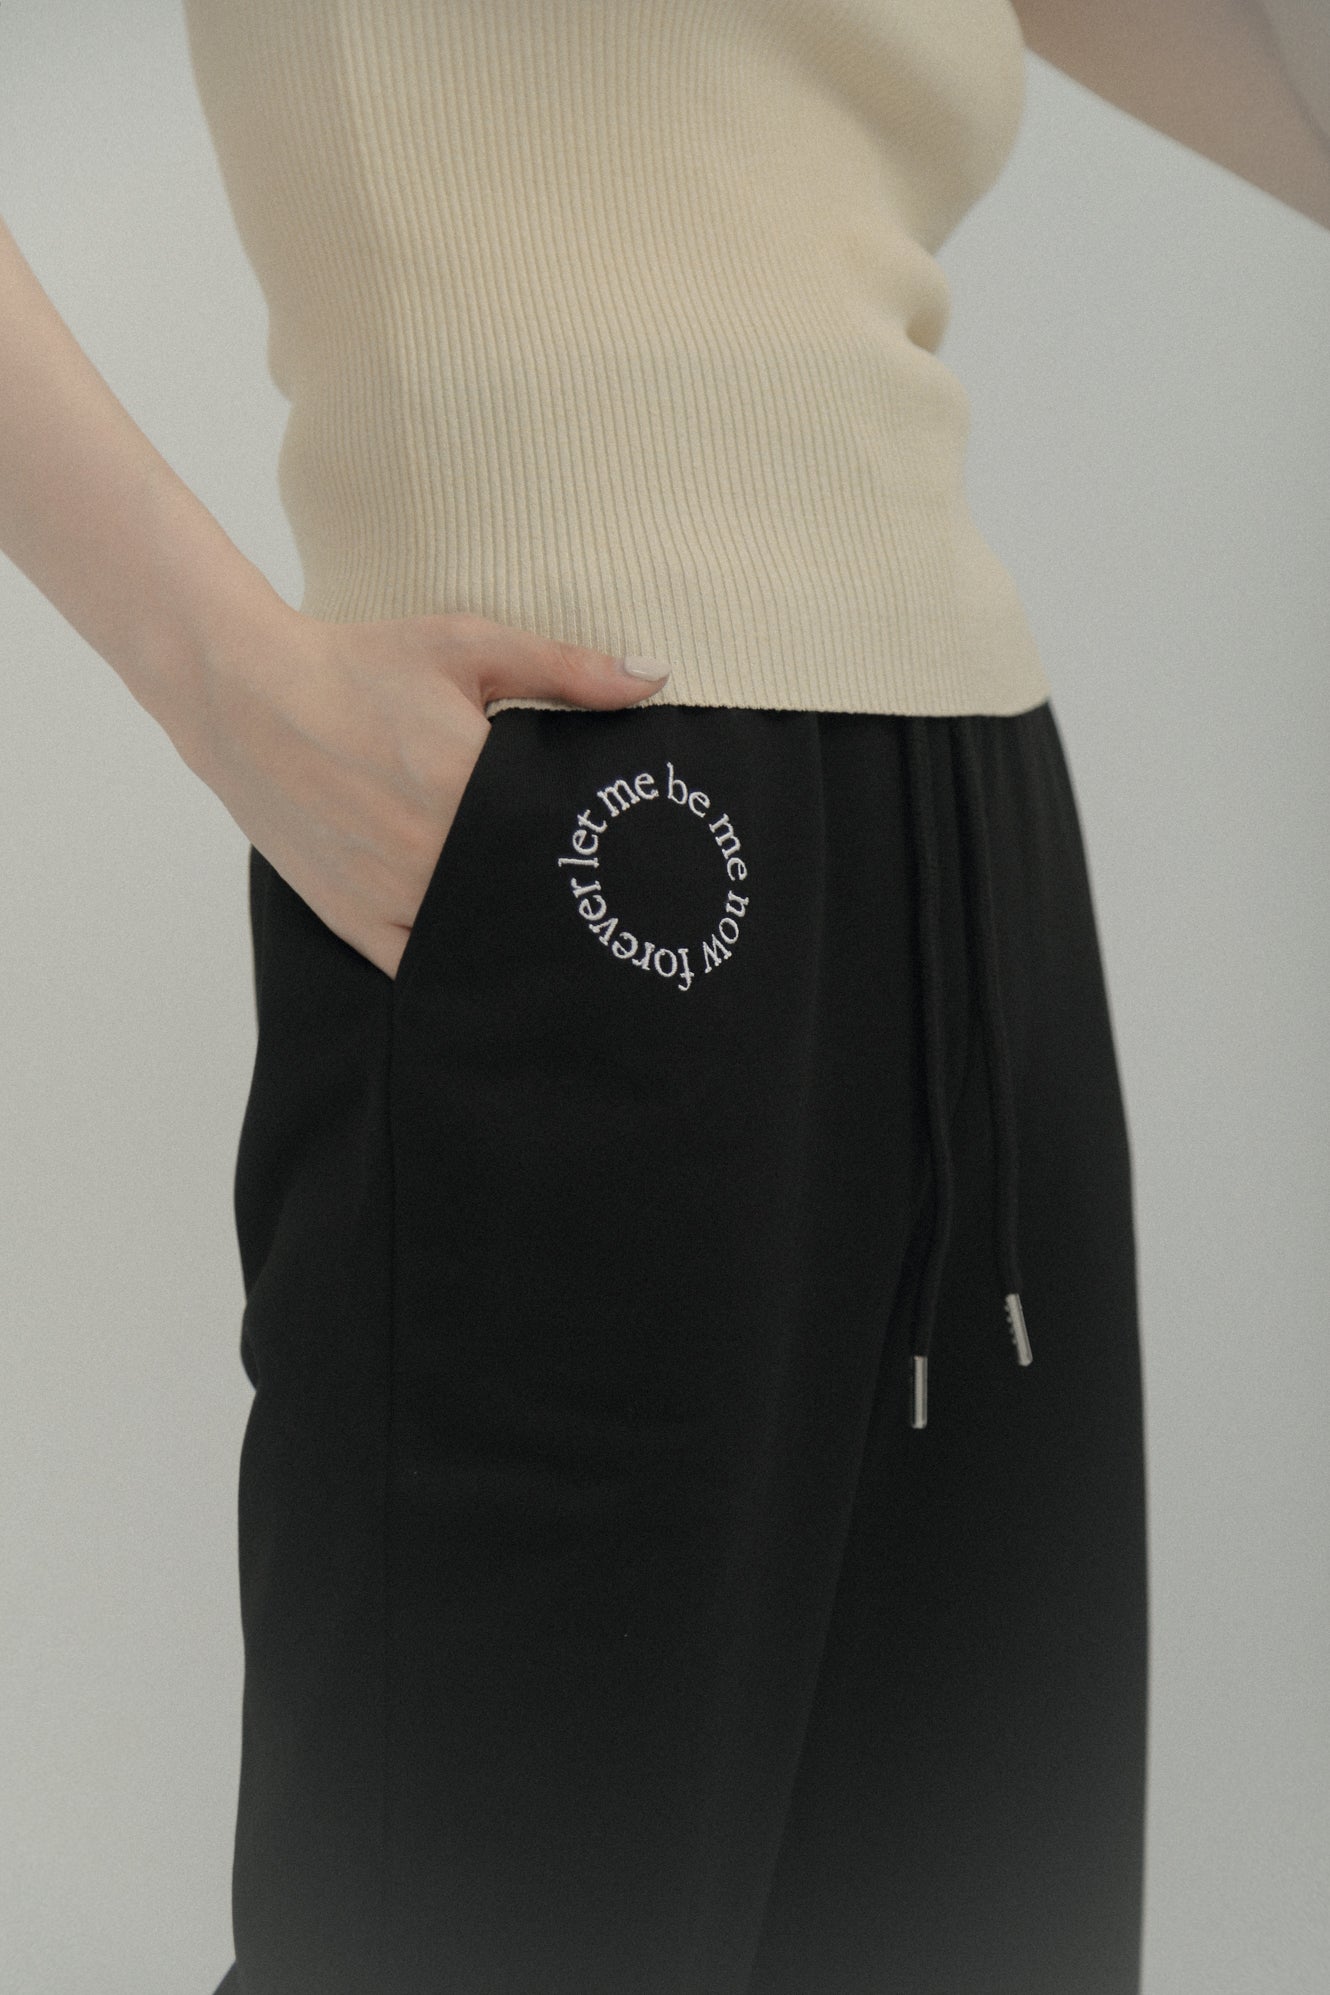 LM Leme logo trousers(Black)